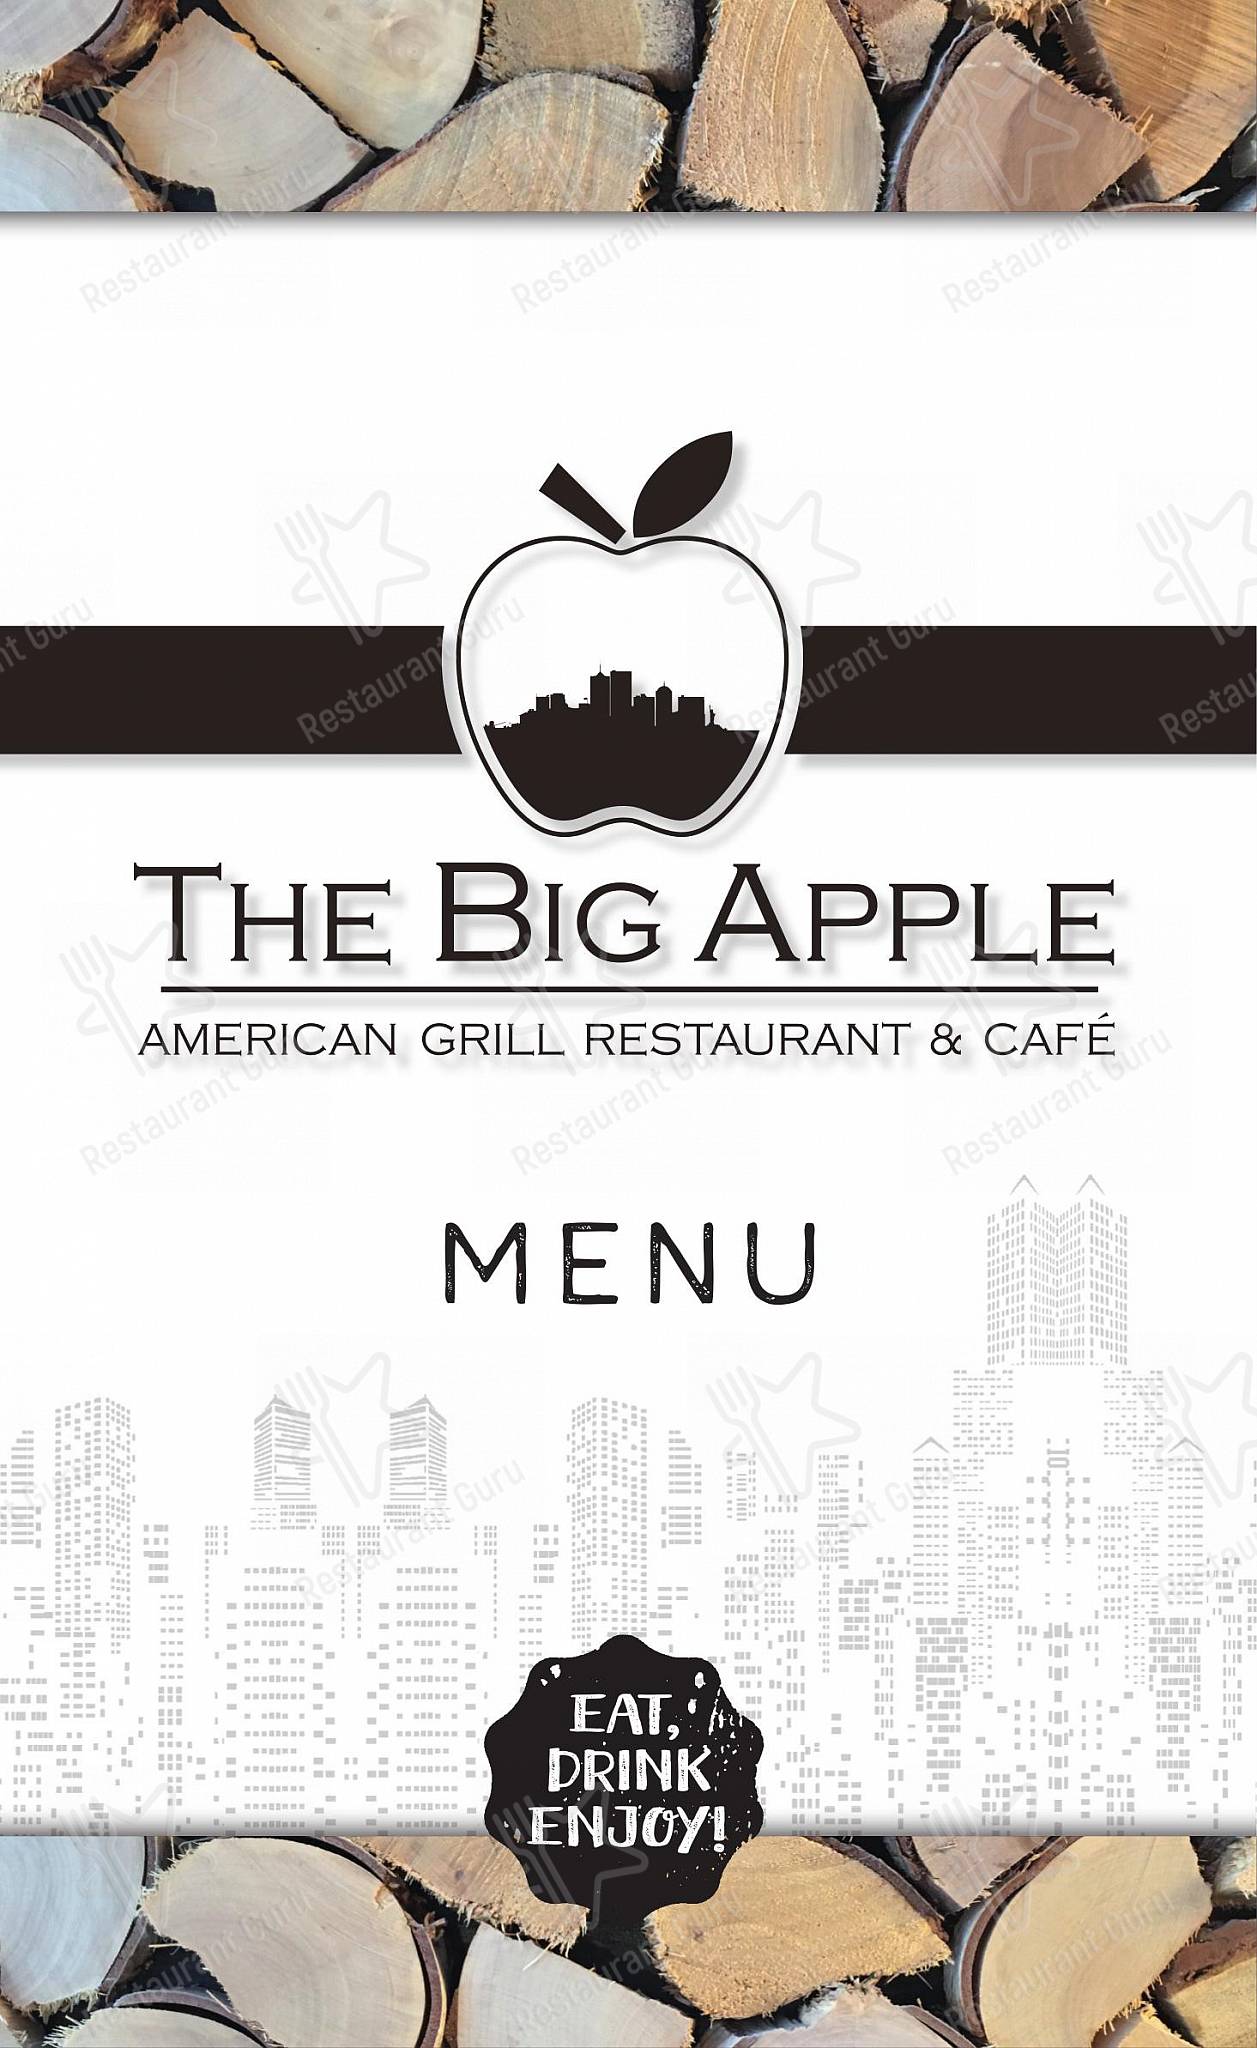 Big apple menu